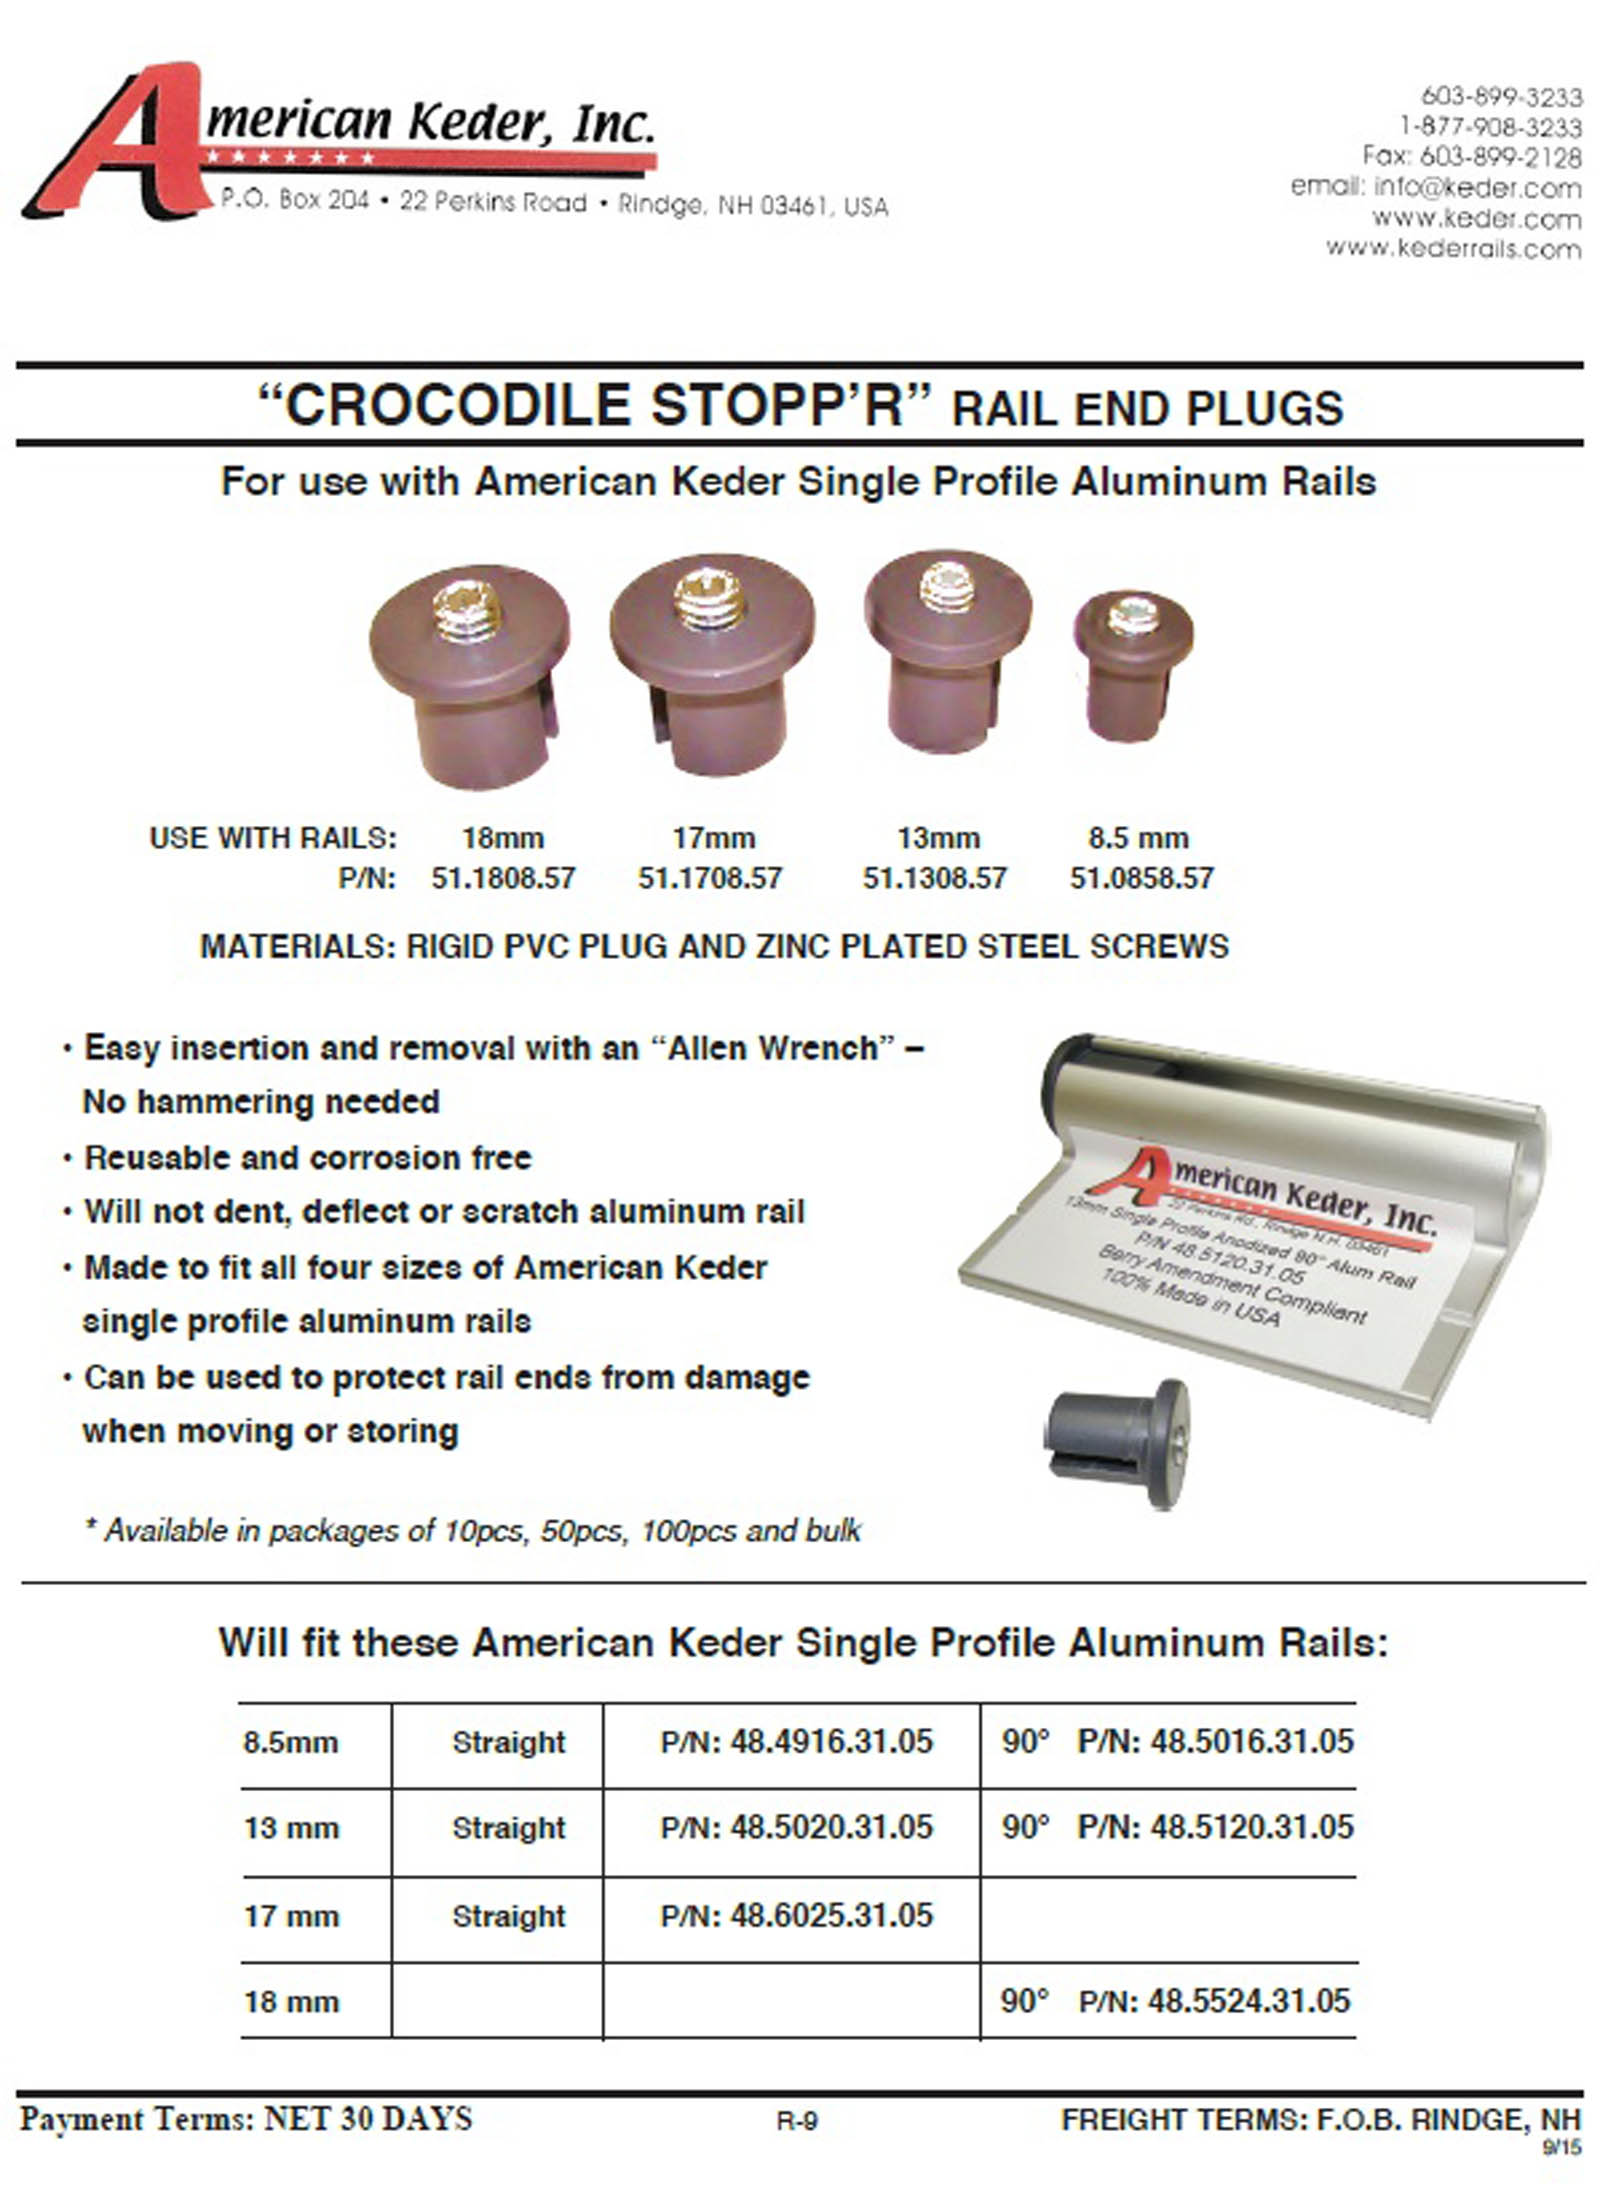 Crocodile Stopp’r Rail End Plug Image